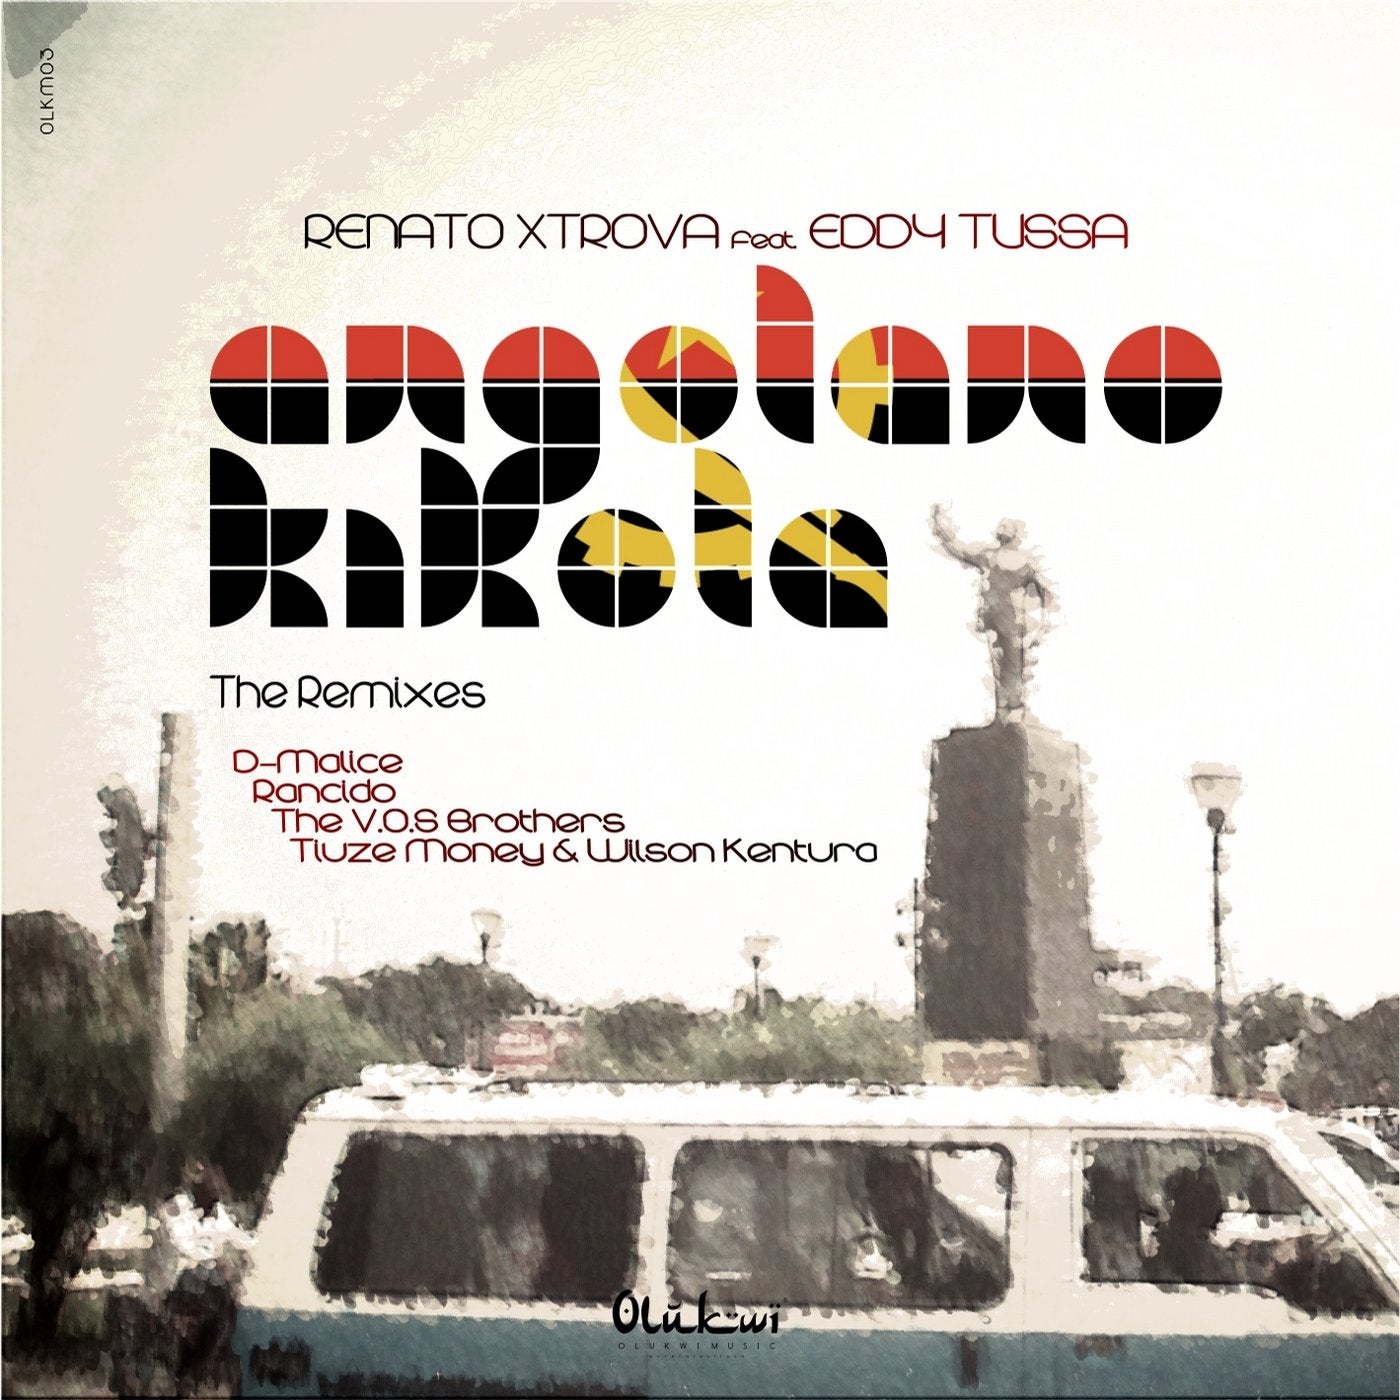 Angolano Kikola (The Remixes)